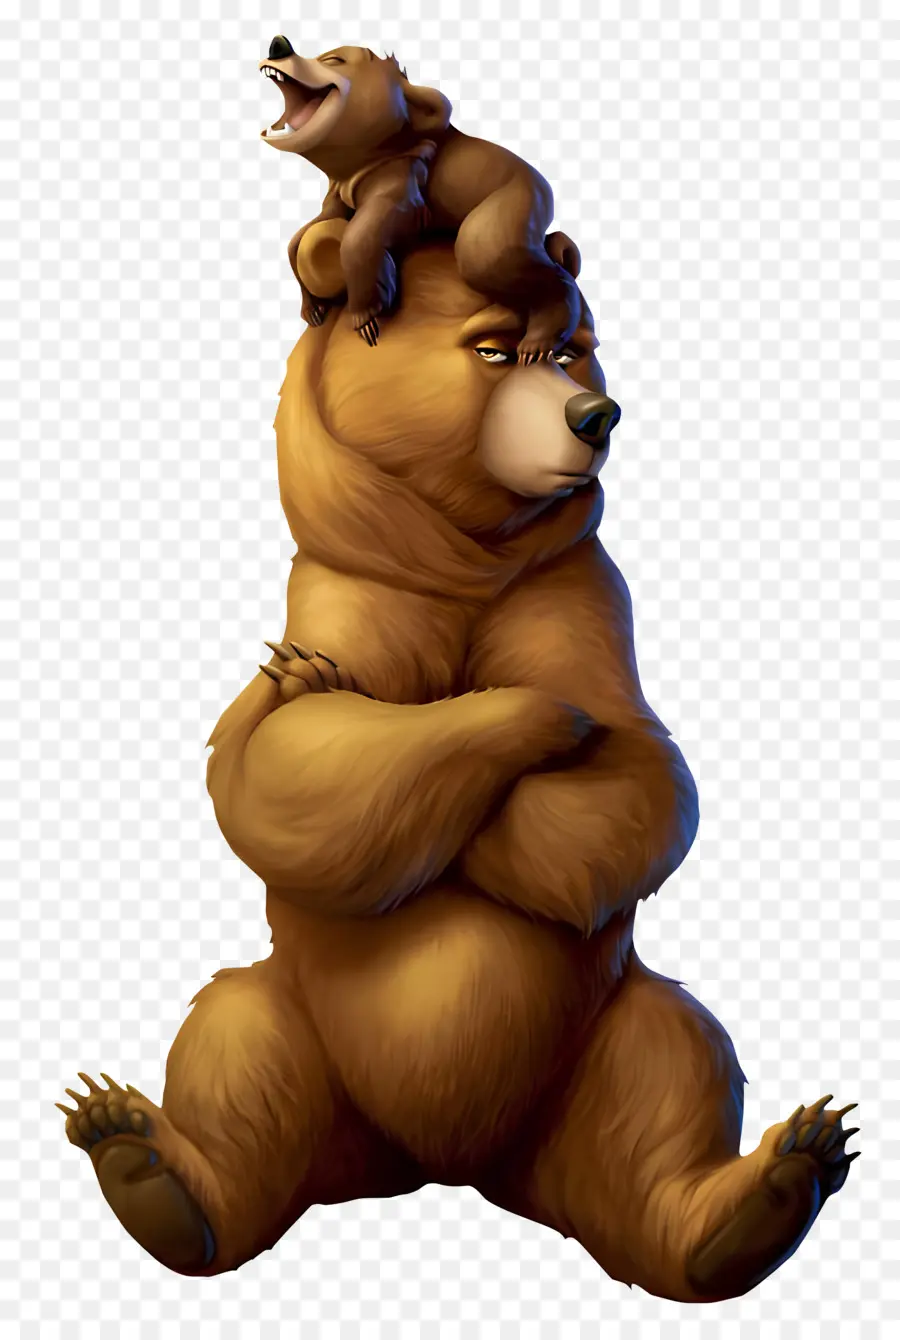 bear logo bears logo brown bear hind legs arms raised